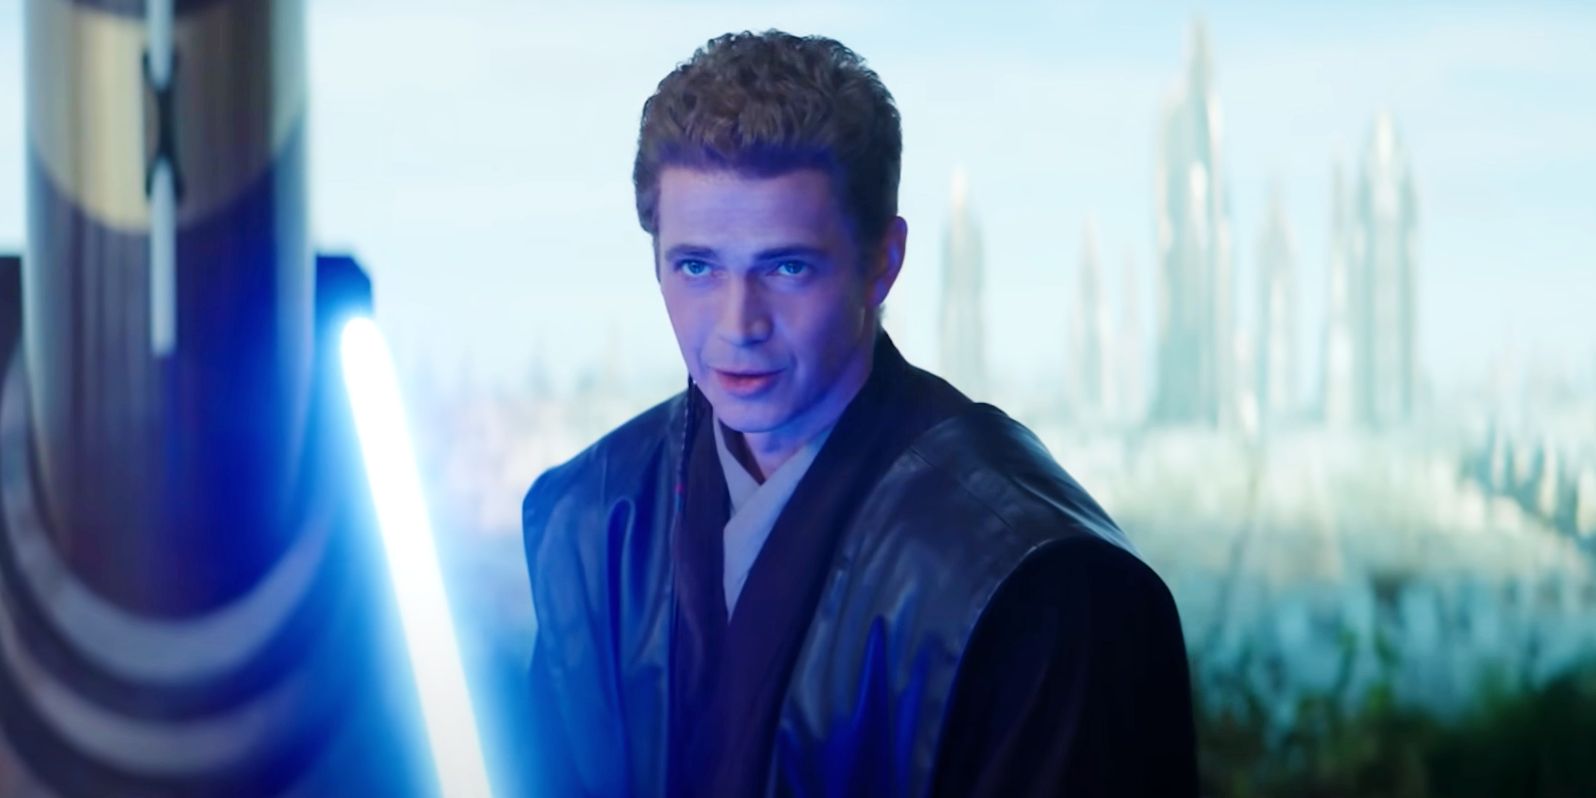 Anakin Skywalker wearing Obi-Wan Kenobi's lightsaber